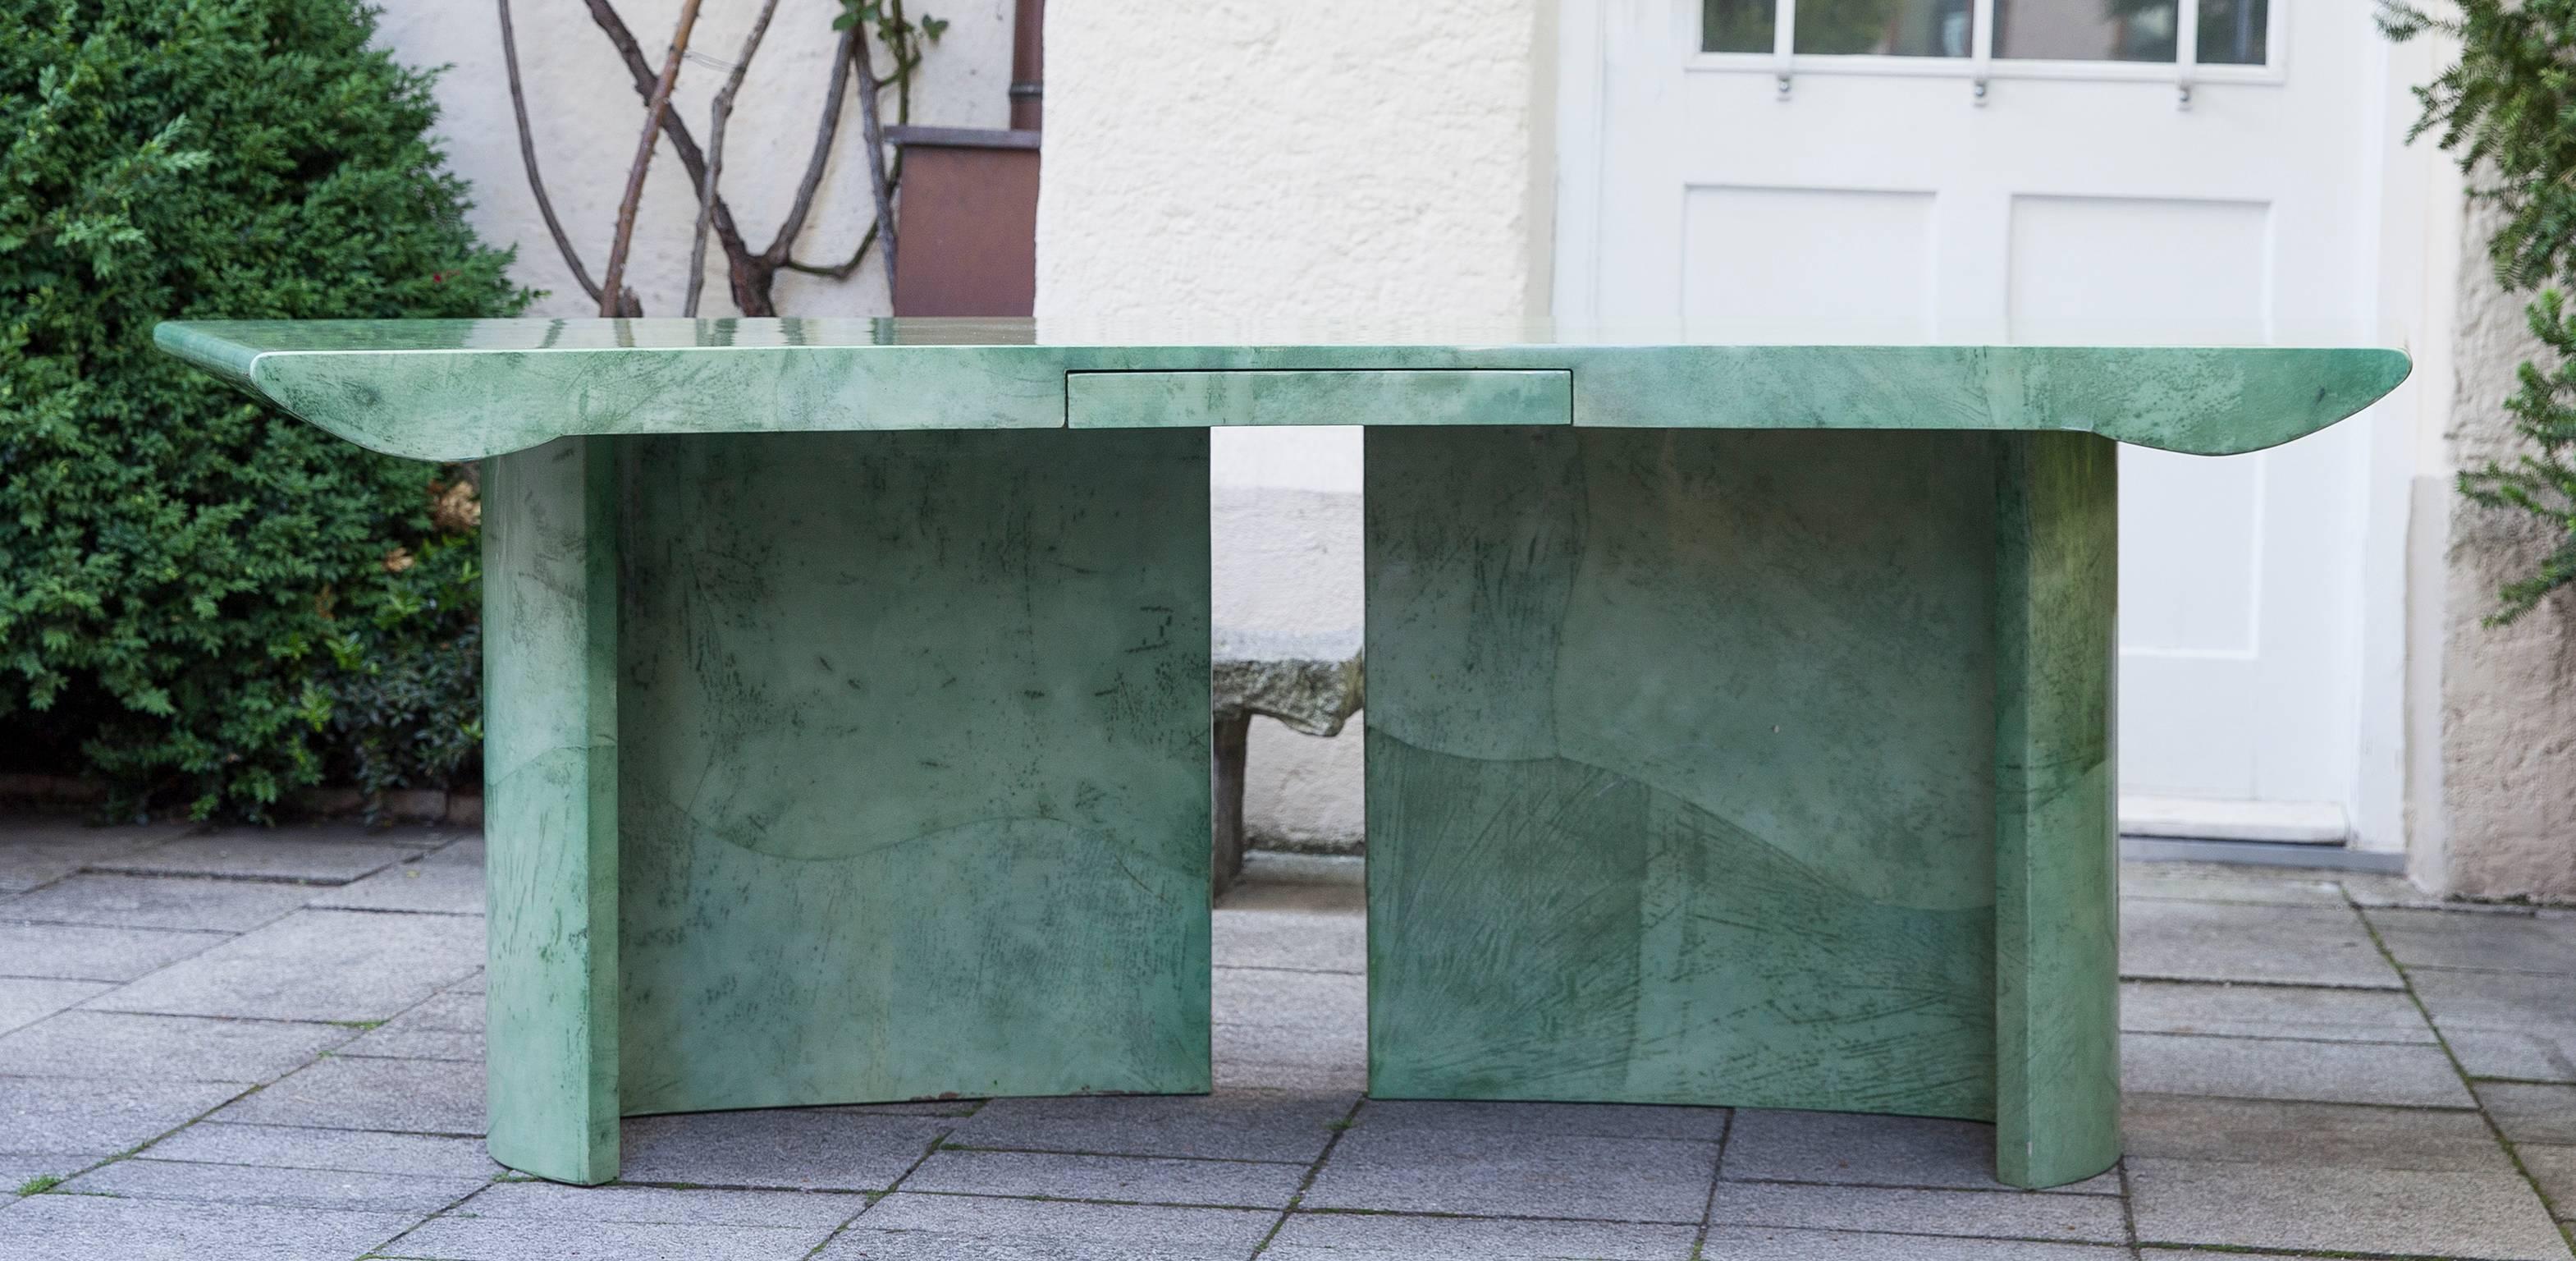 Wonderful Aldo Tura modern style mint green desk in asymmetric shape from Italy, 1980s.

Measures: H 75 x W 220 x D 100 cm.